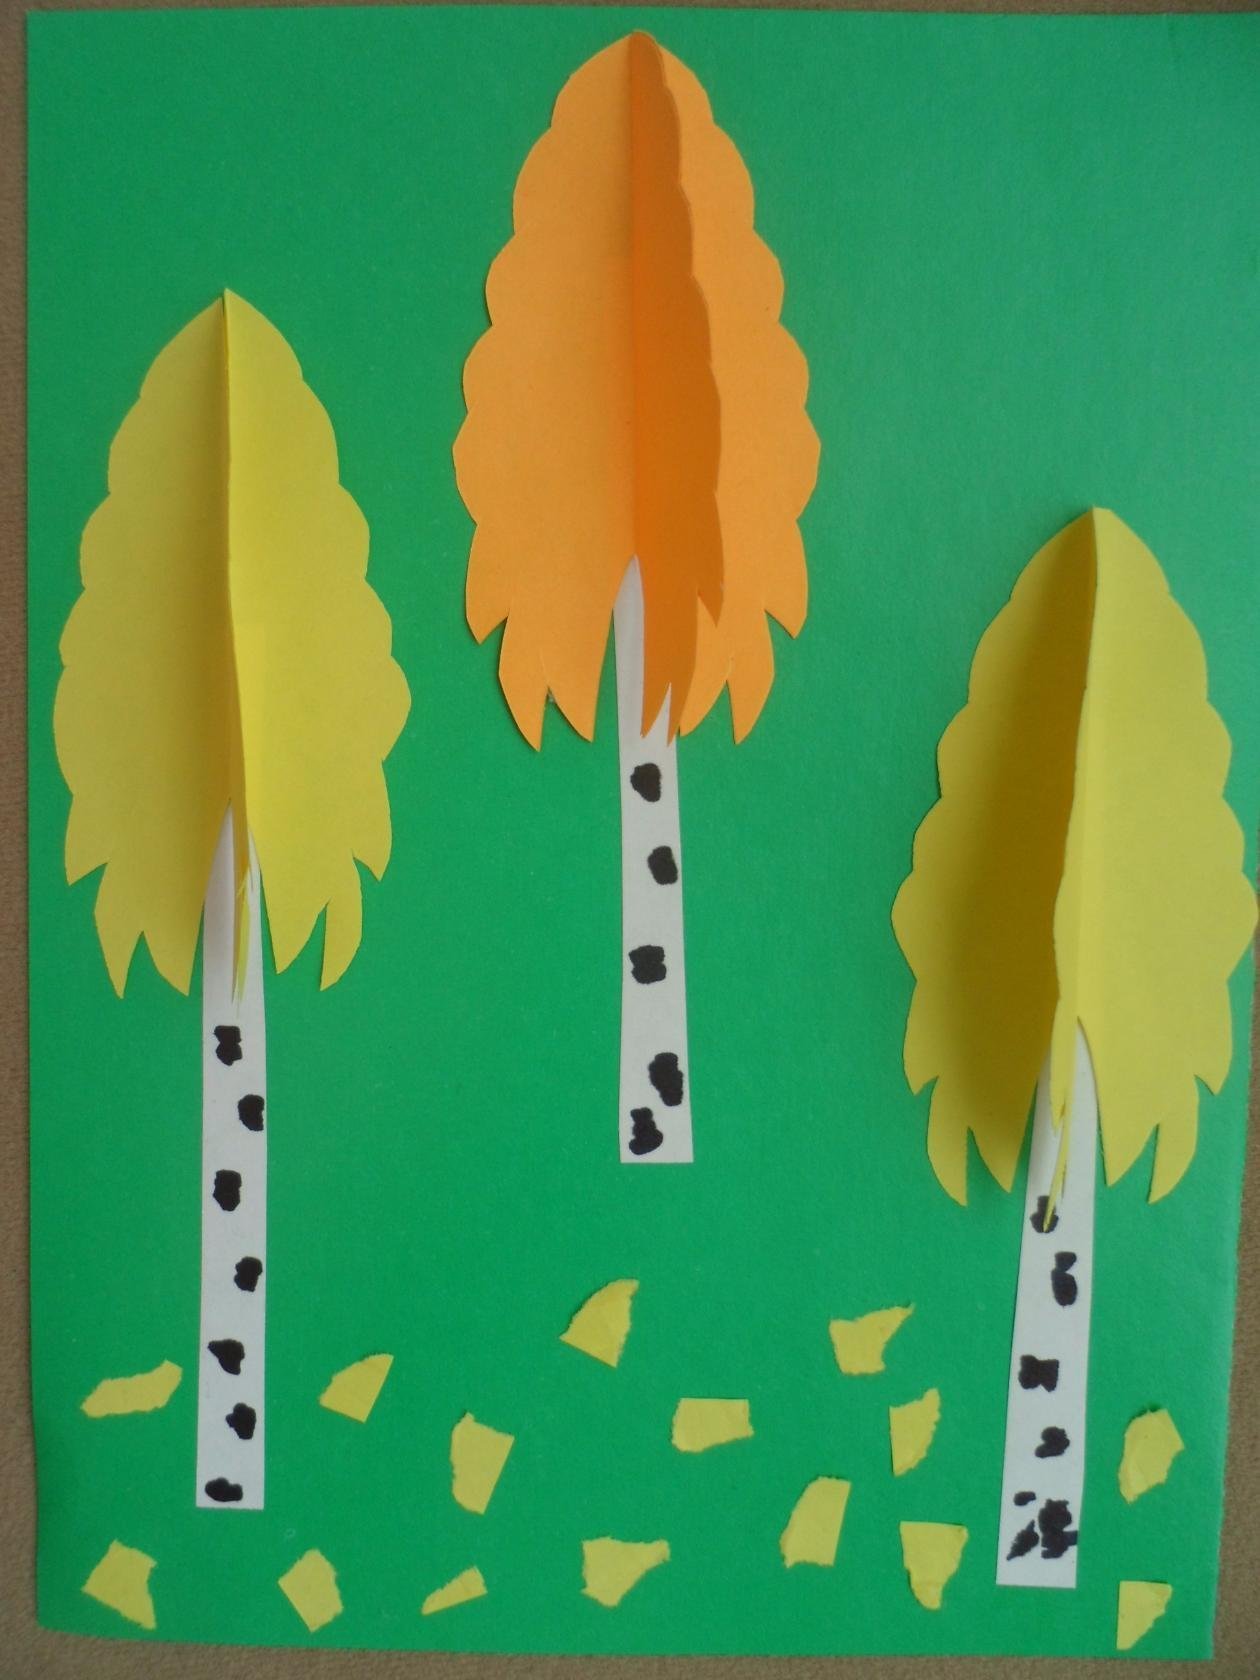 Поделки лес из бумаги на картоне идеи по изготовлению своими руками фото